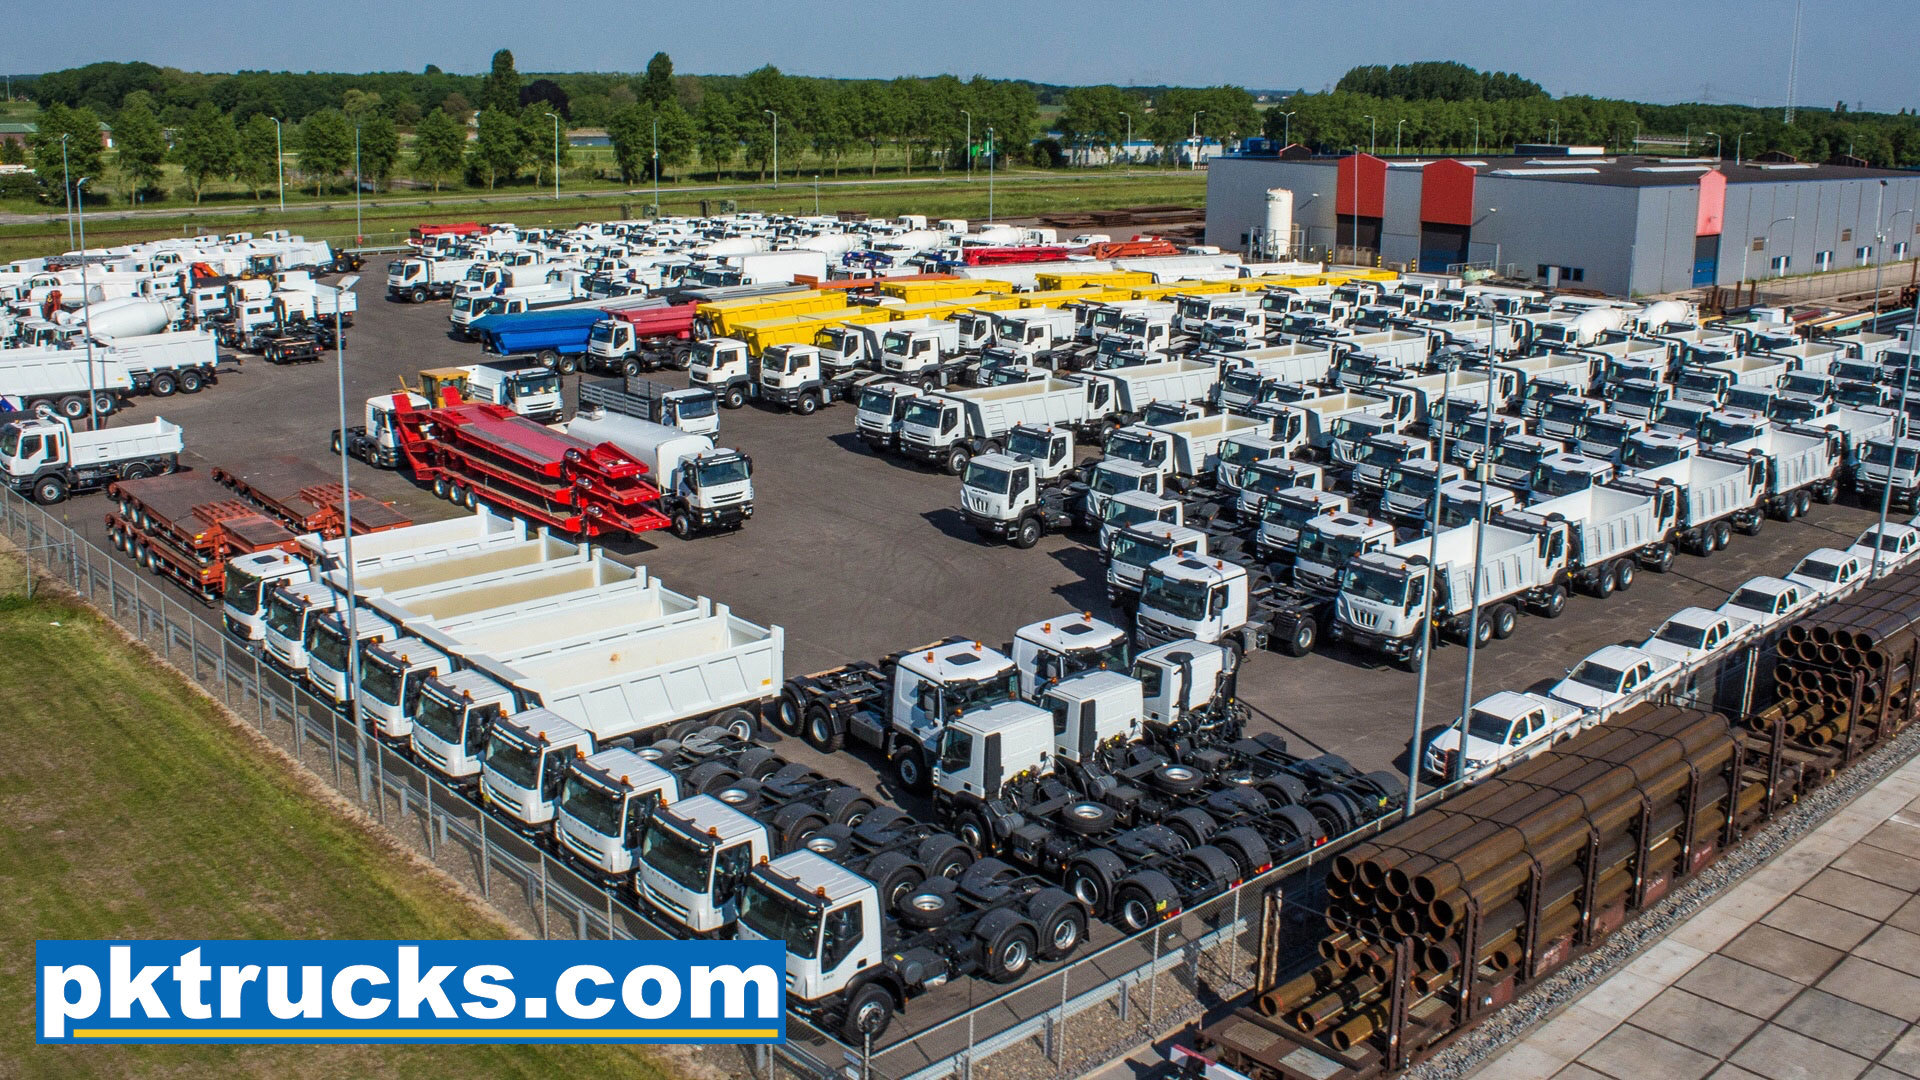 Pk trucks holland undefined: photos 3